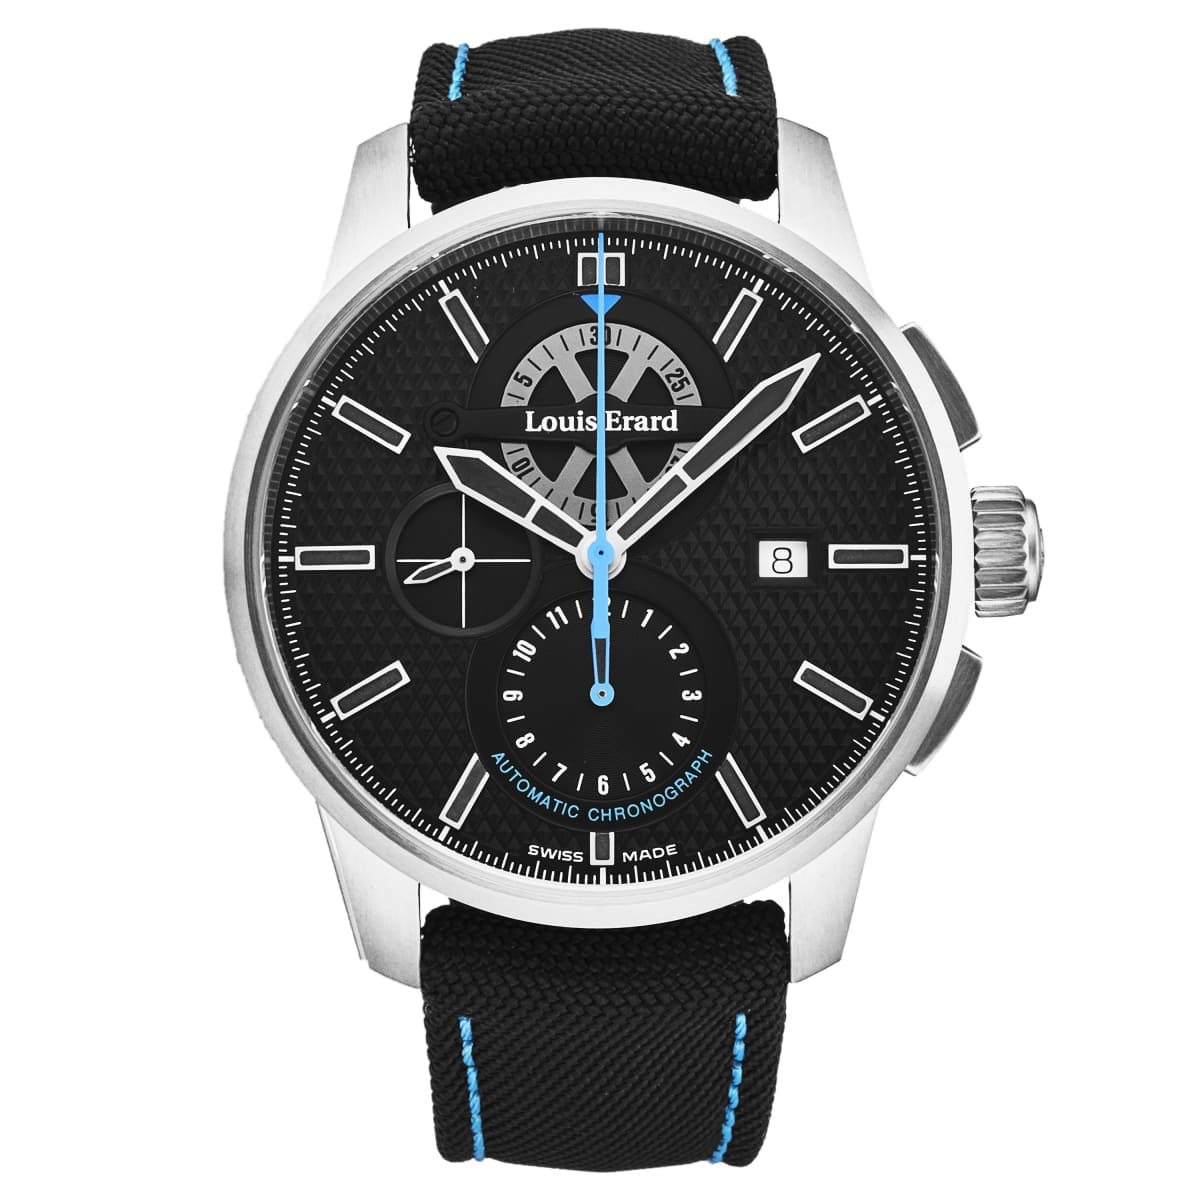 Louis Erard Men’s ’Sportive’ Chronograph Black Dial Fabric Strap Automatic Watch 78240TS05.BATT05 - On sale